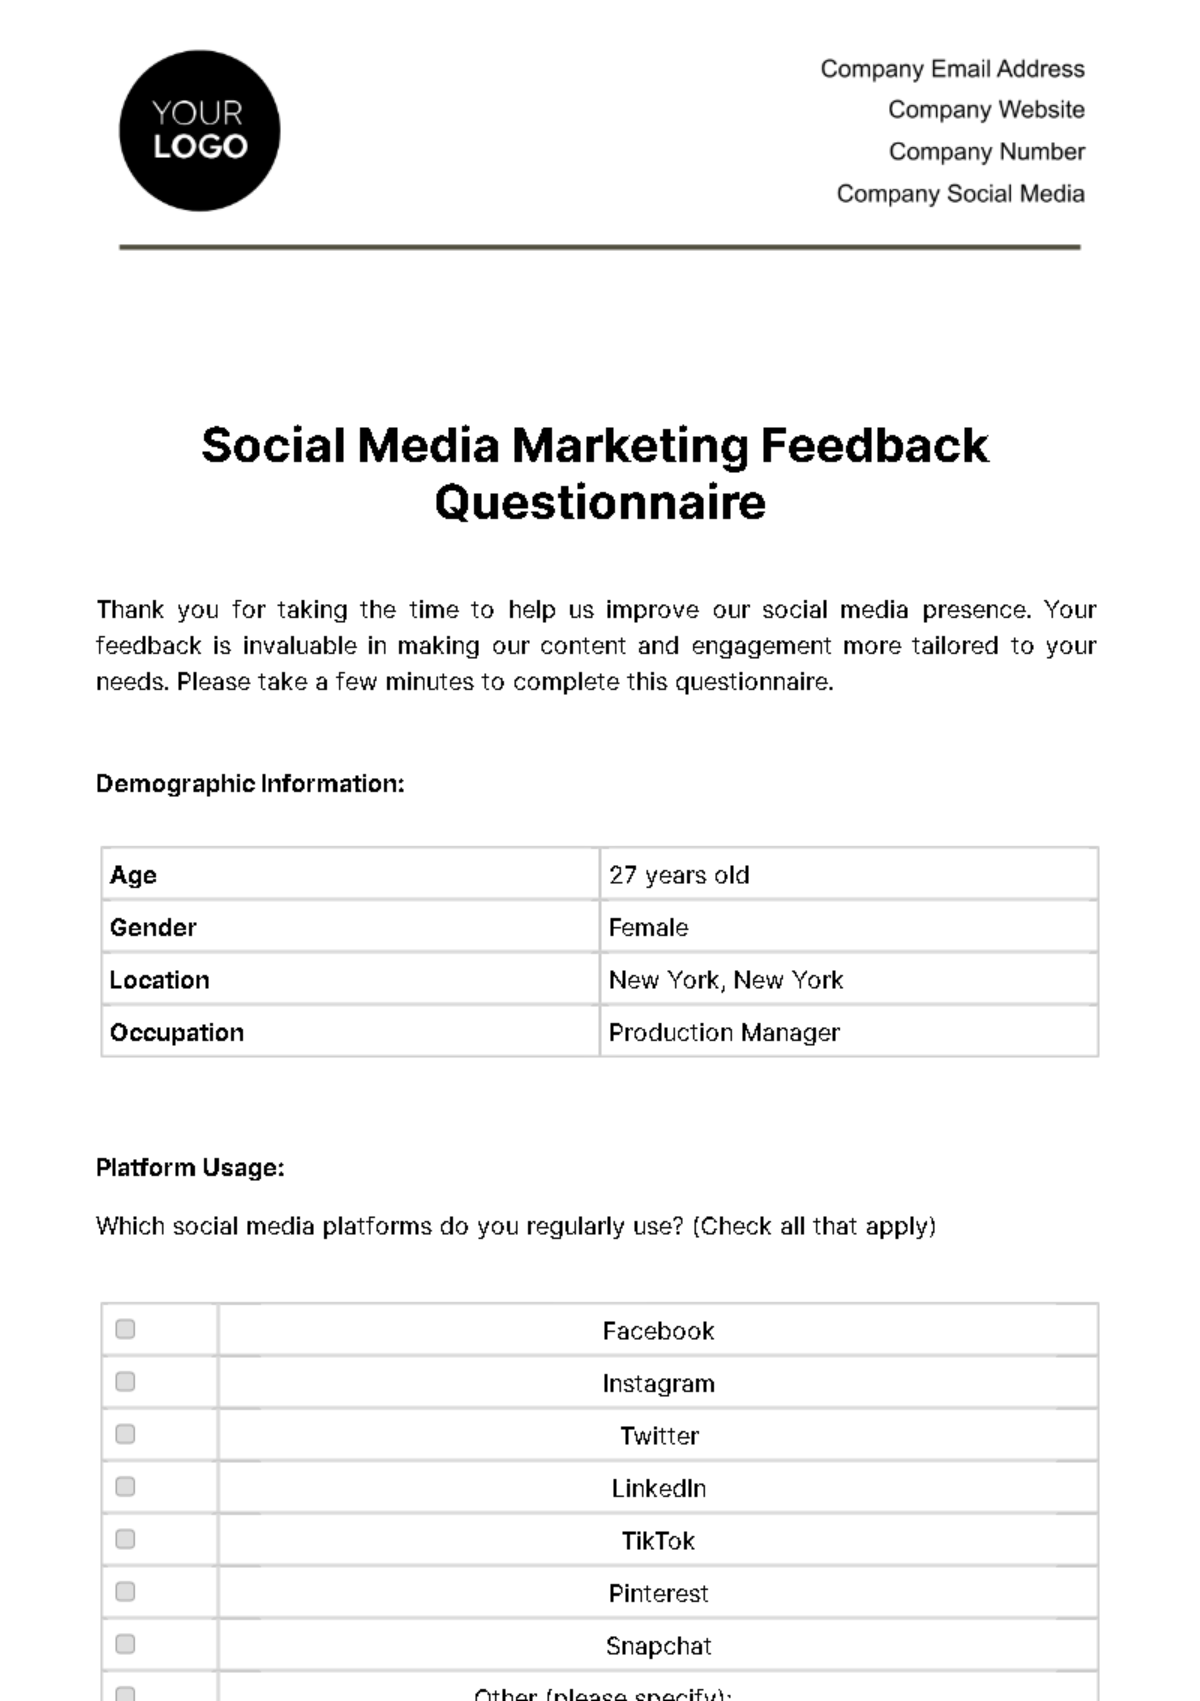 Free Social Media Marketing Feedback Questionnaire Template